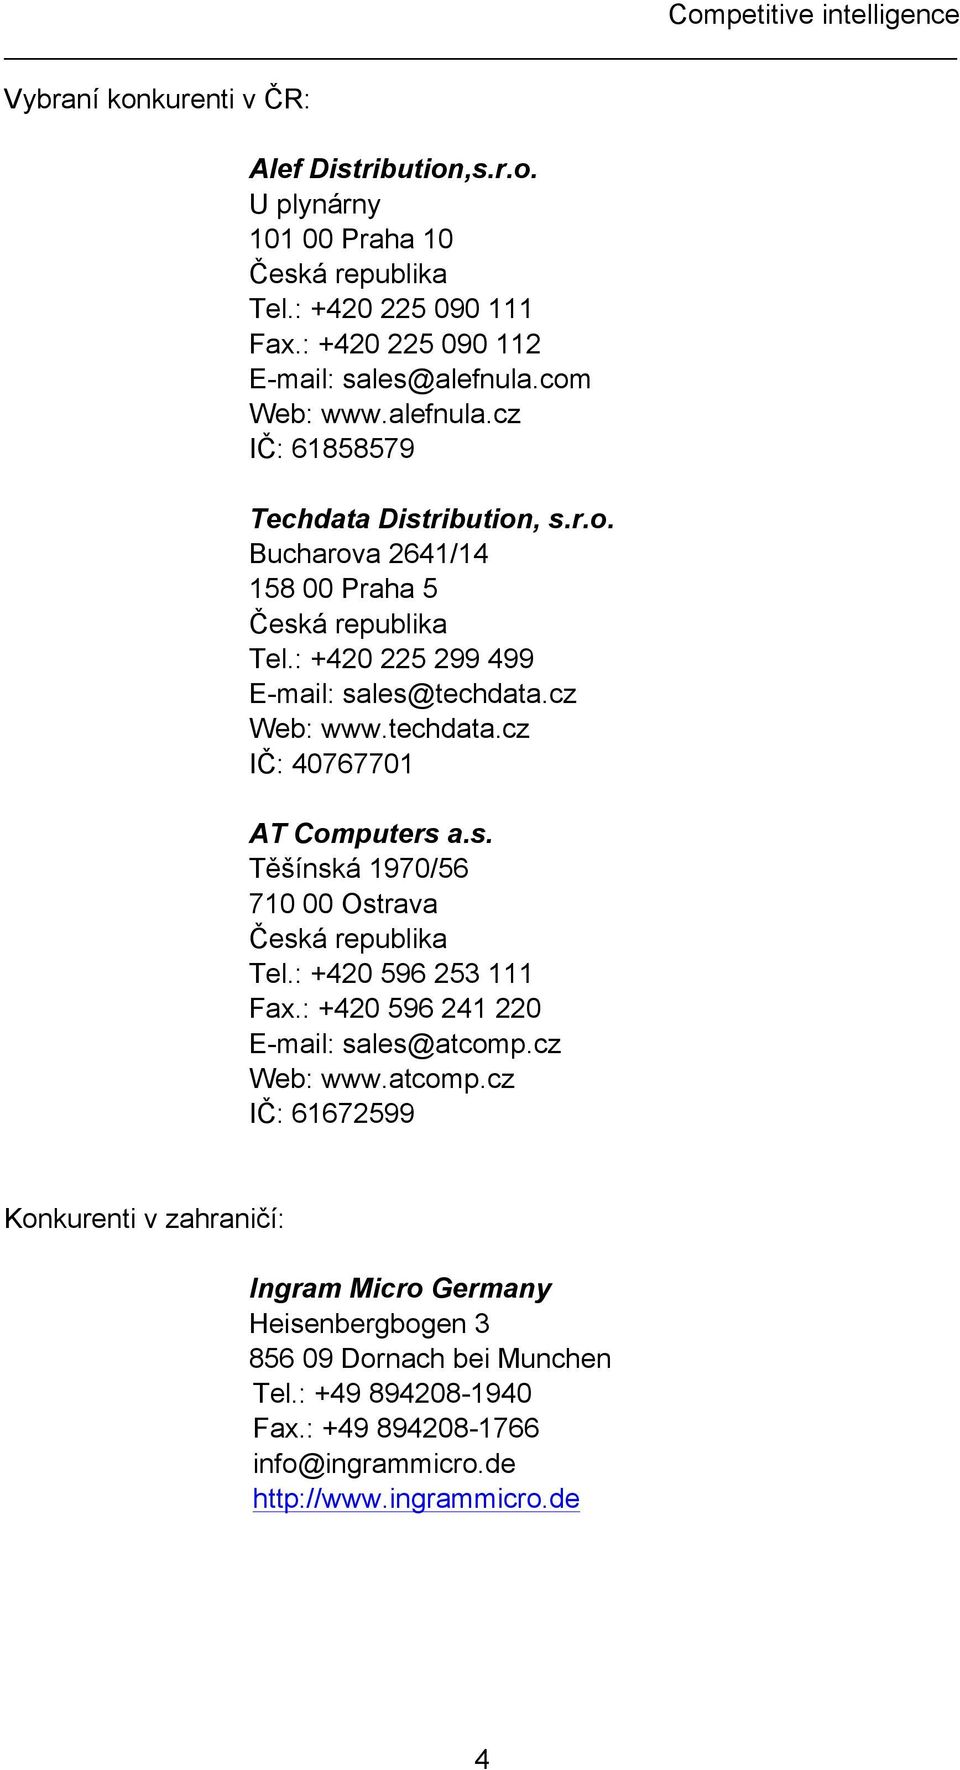 cz : www.techdata.cz IČ: 40767701 AT Computers a.s. Těšínská 1970/56 710 00 Ostrava Tel.: +420 596 253 111 Fax.: +420 596 241 220 E-mail: sales@atcomp.